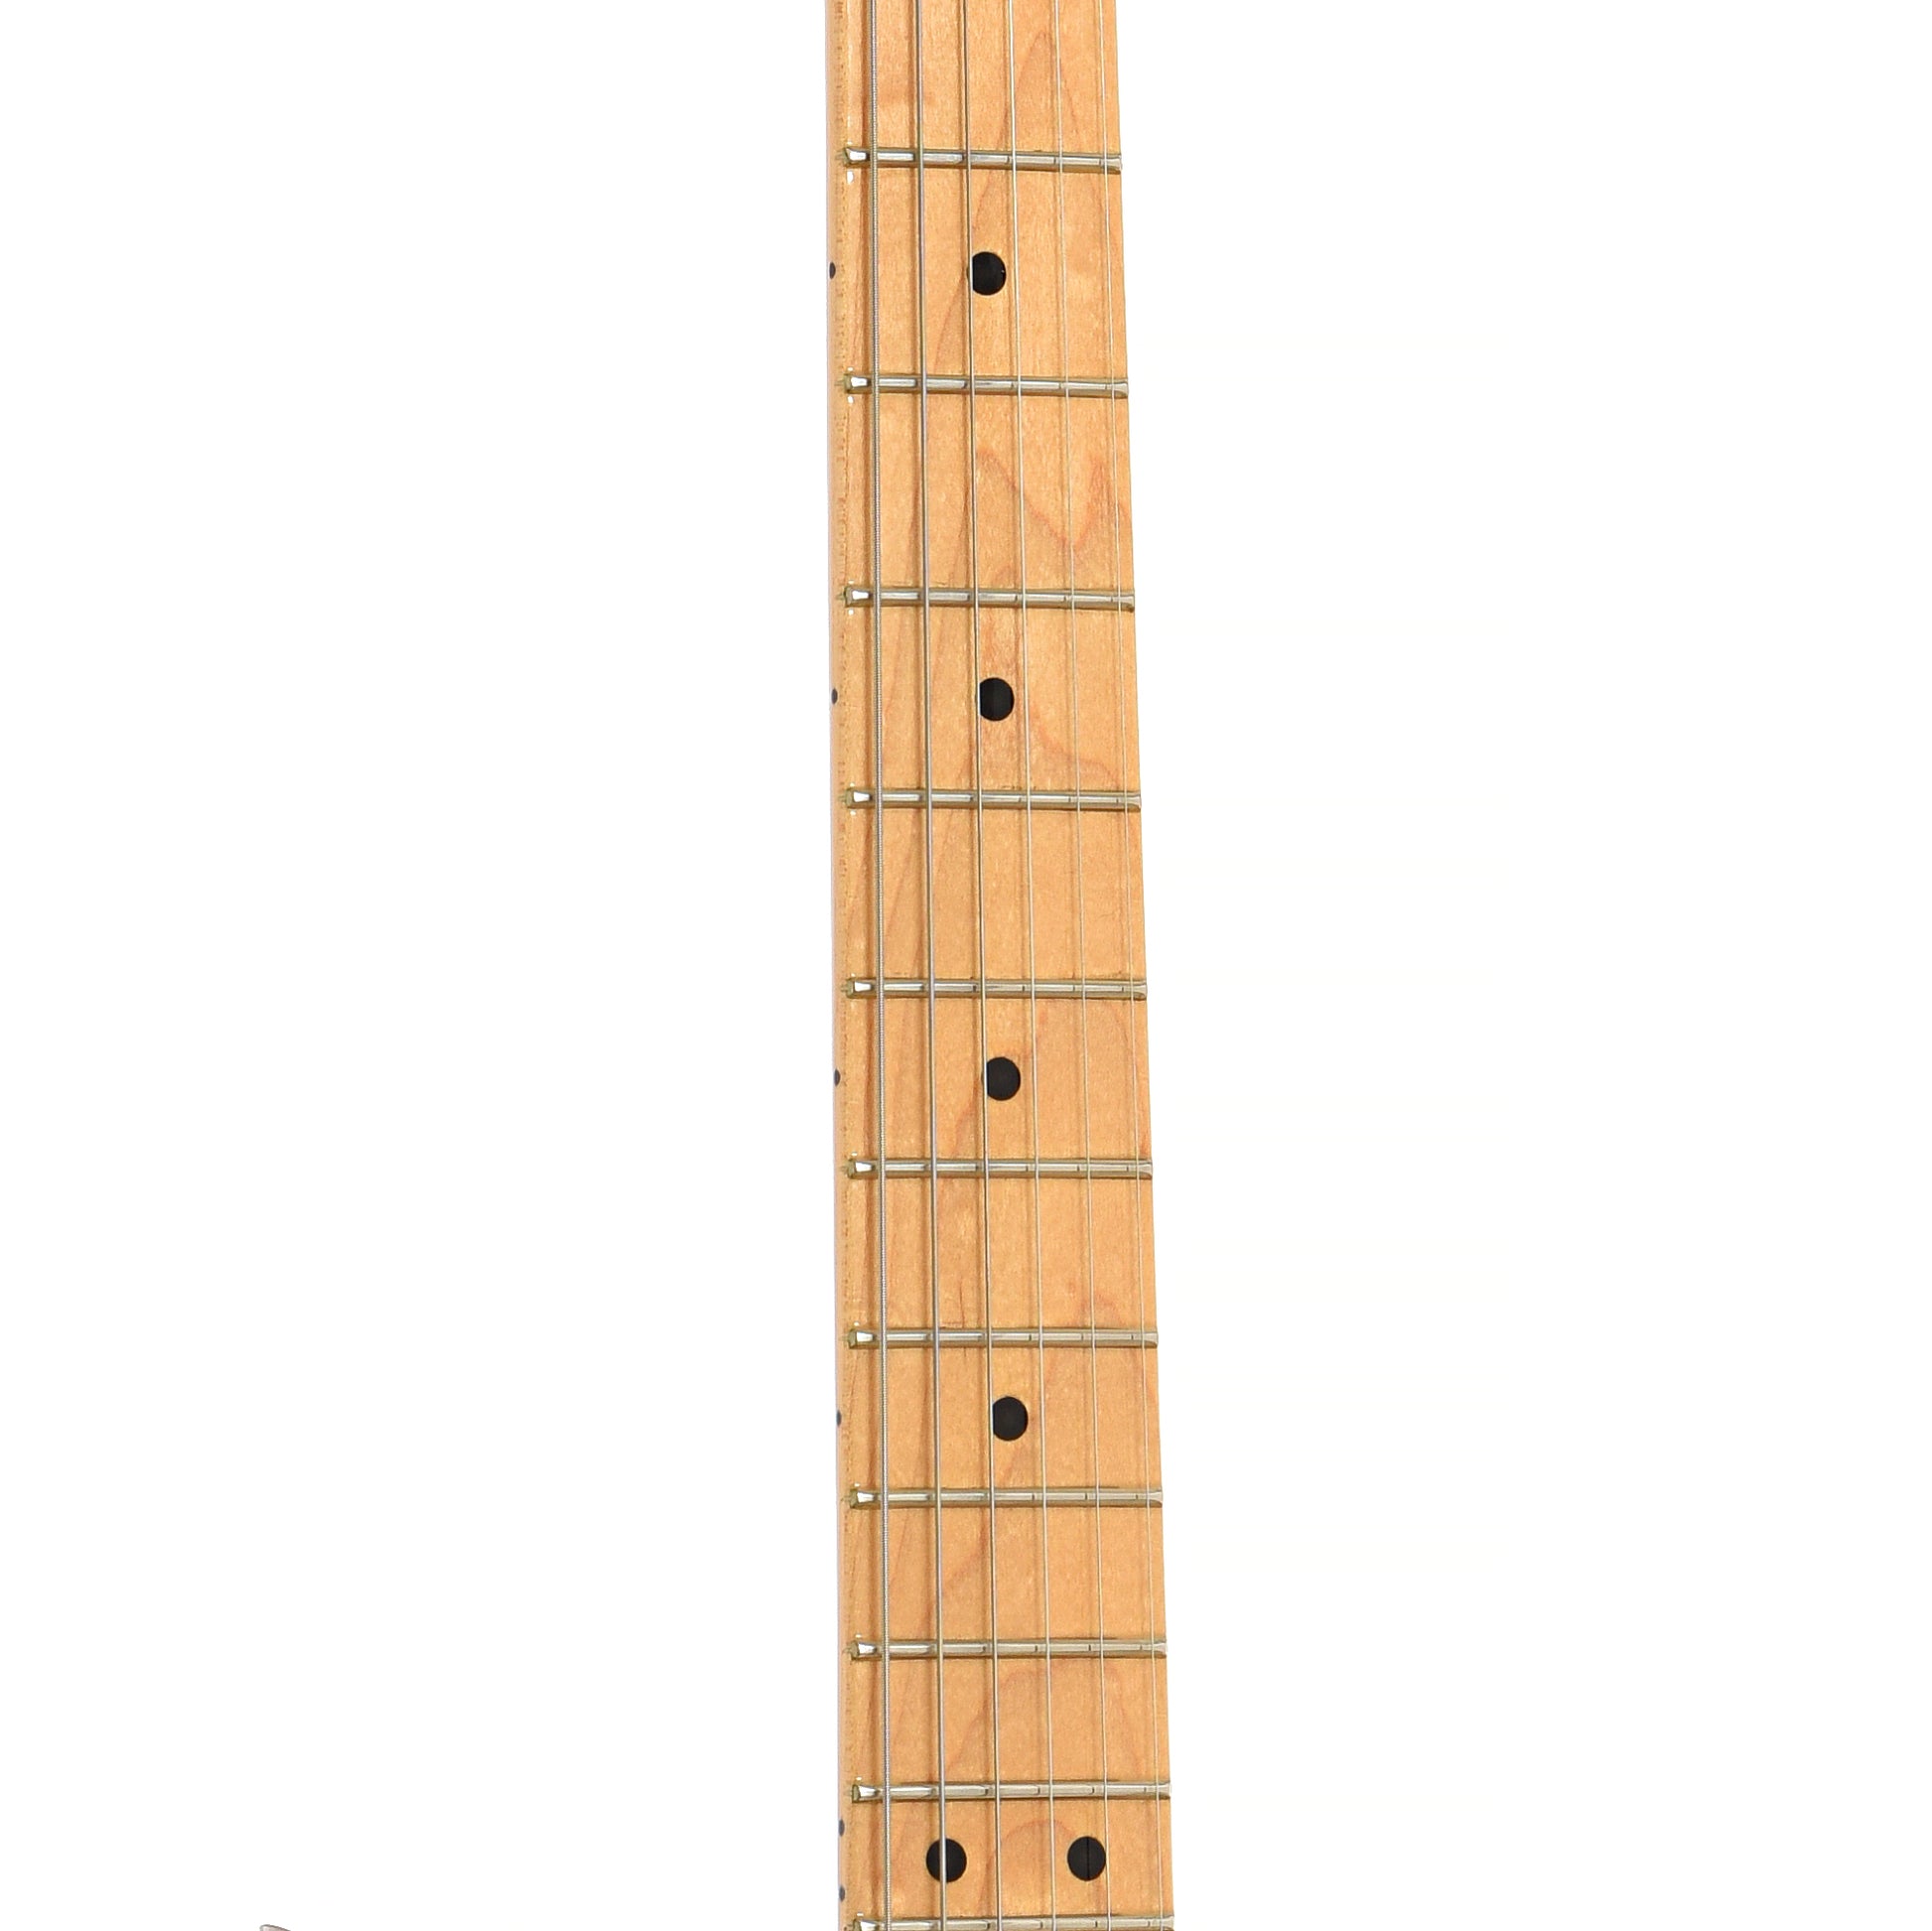 Fretboard of Fender New American Standard Stratocaster